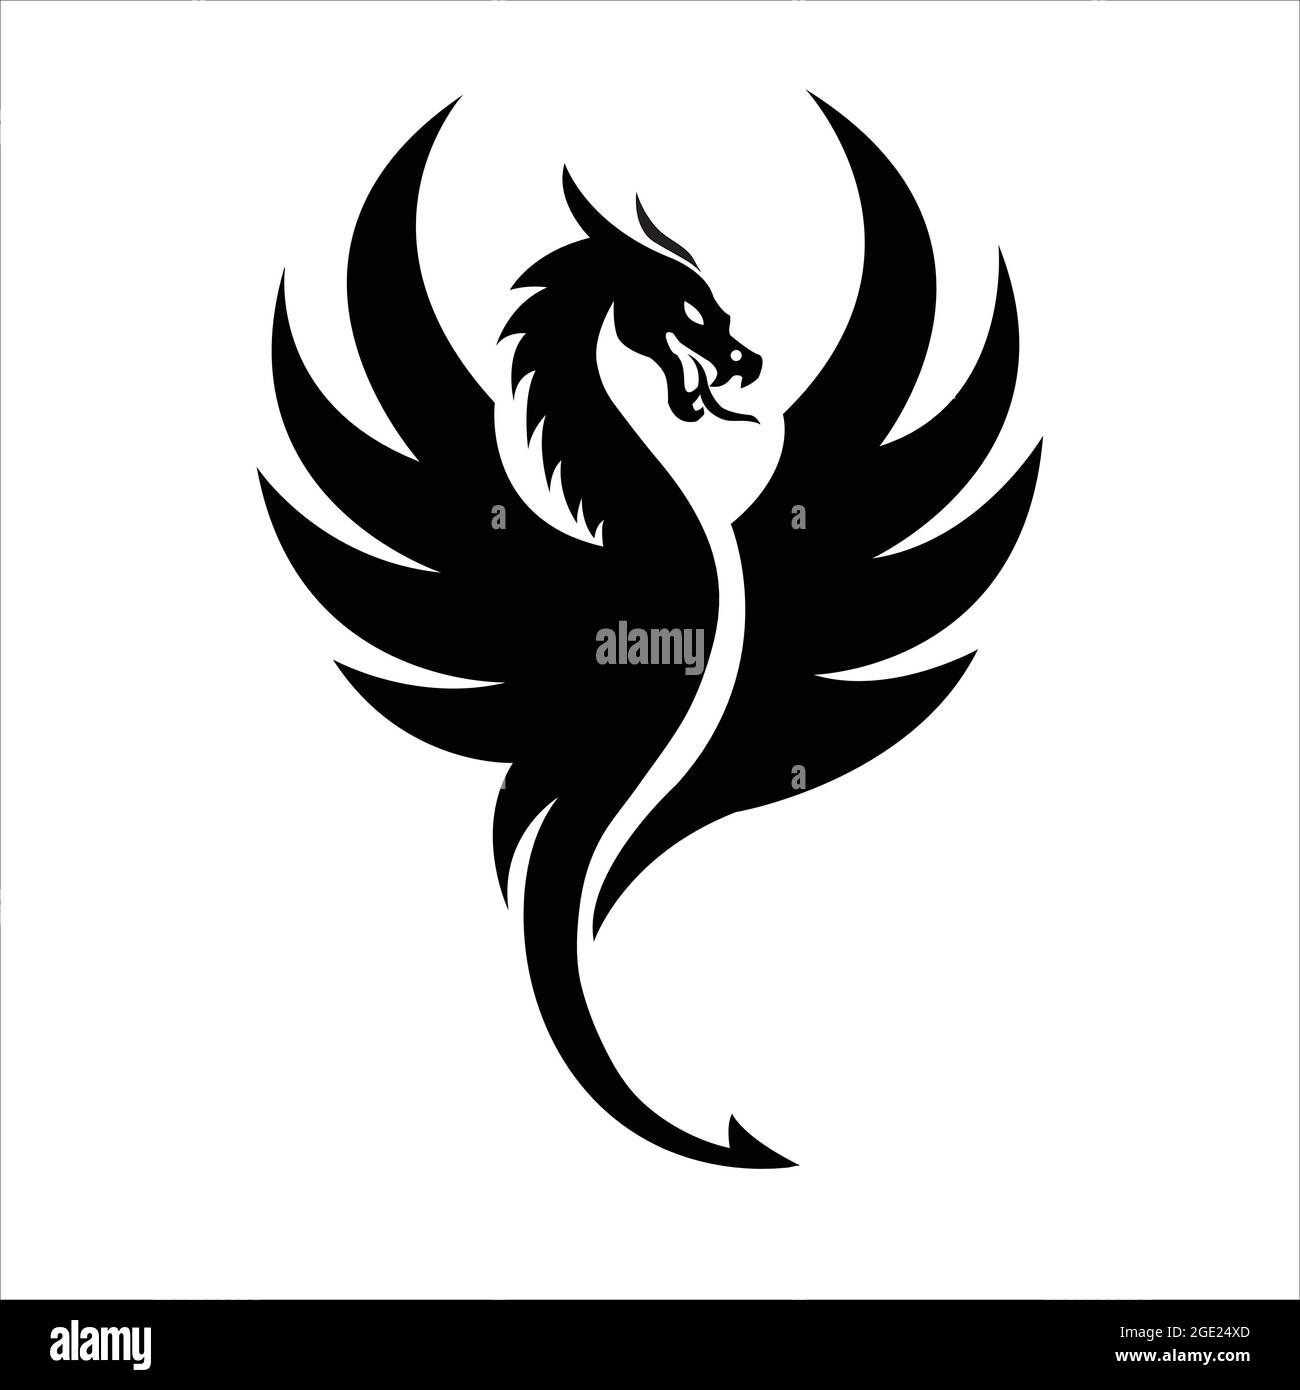 Free Dragon Tattoo Vector  Download in Illustrator EPS SVG JPG PNG   Templatenet